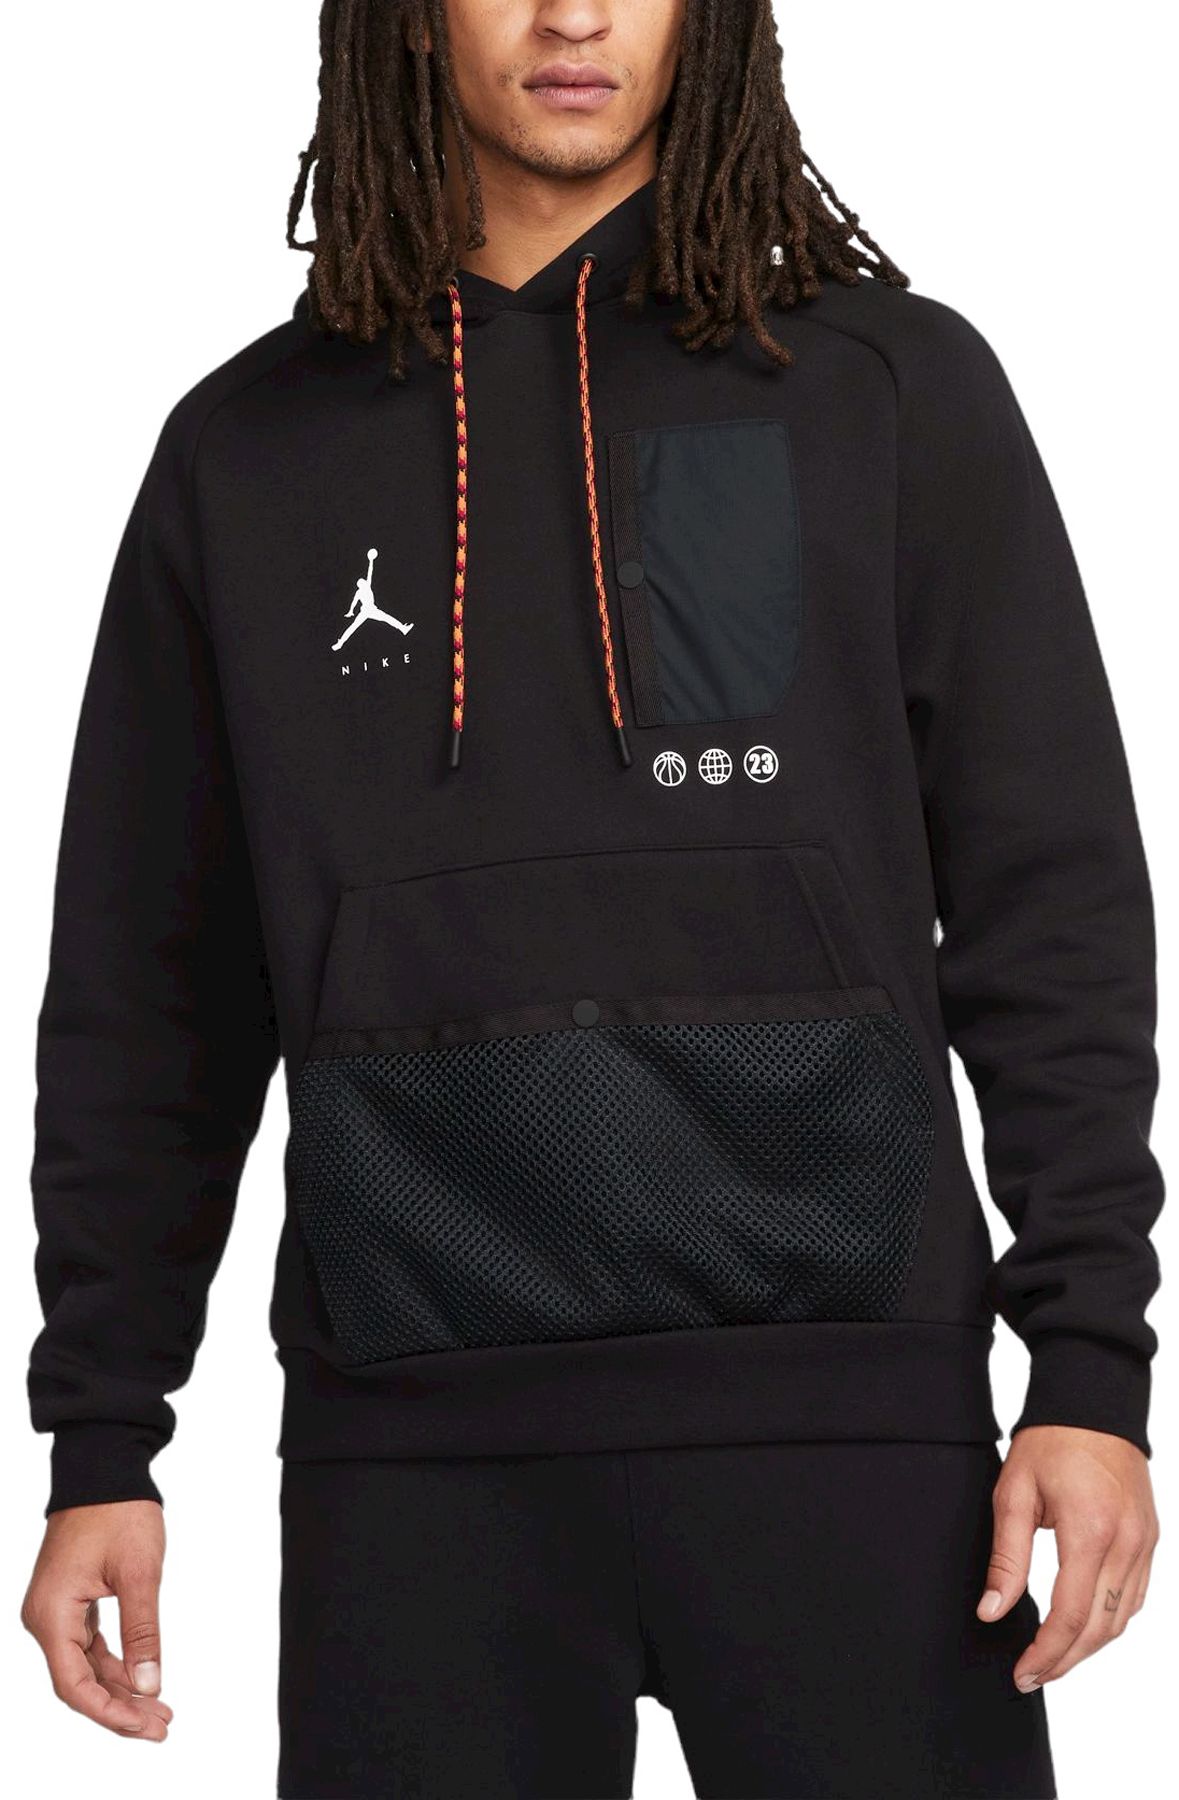 Jordan Jumpman Men's Black Fleece Pullover Hoodie, Size: XL